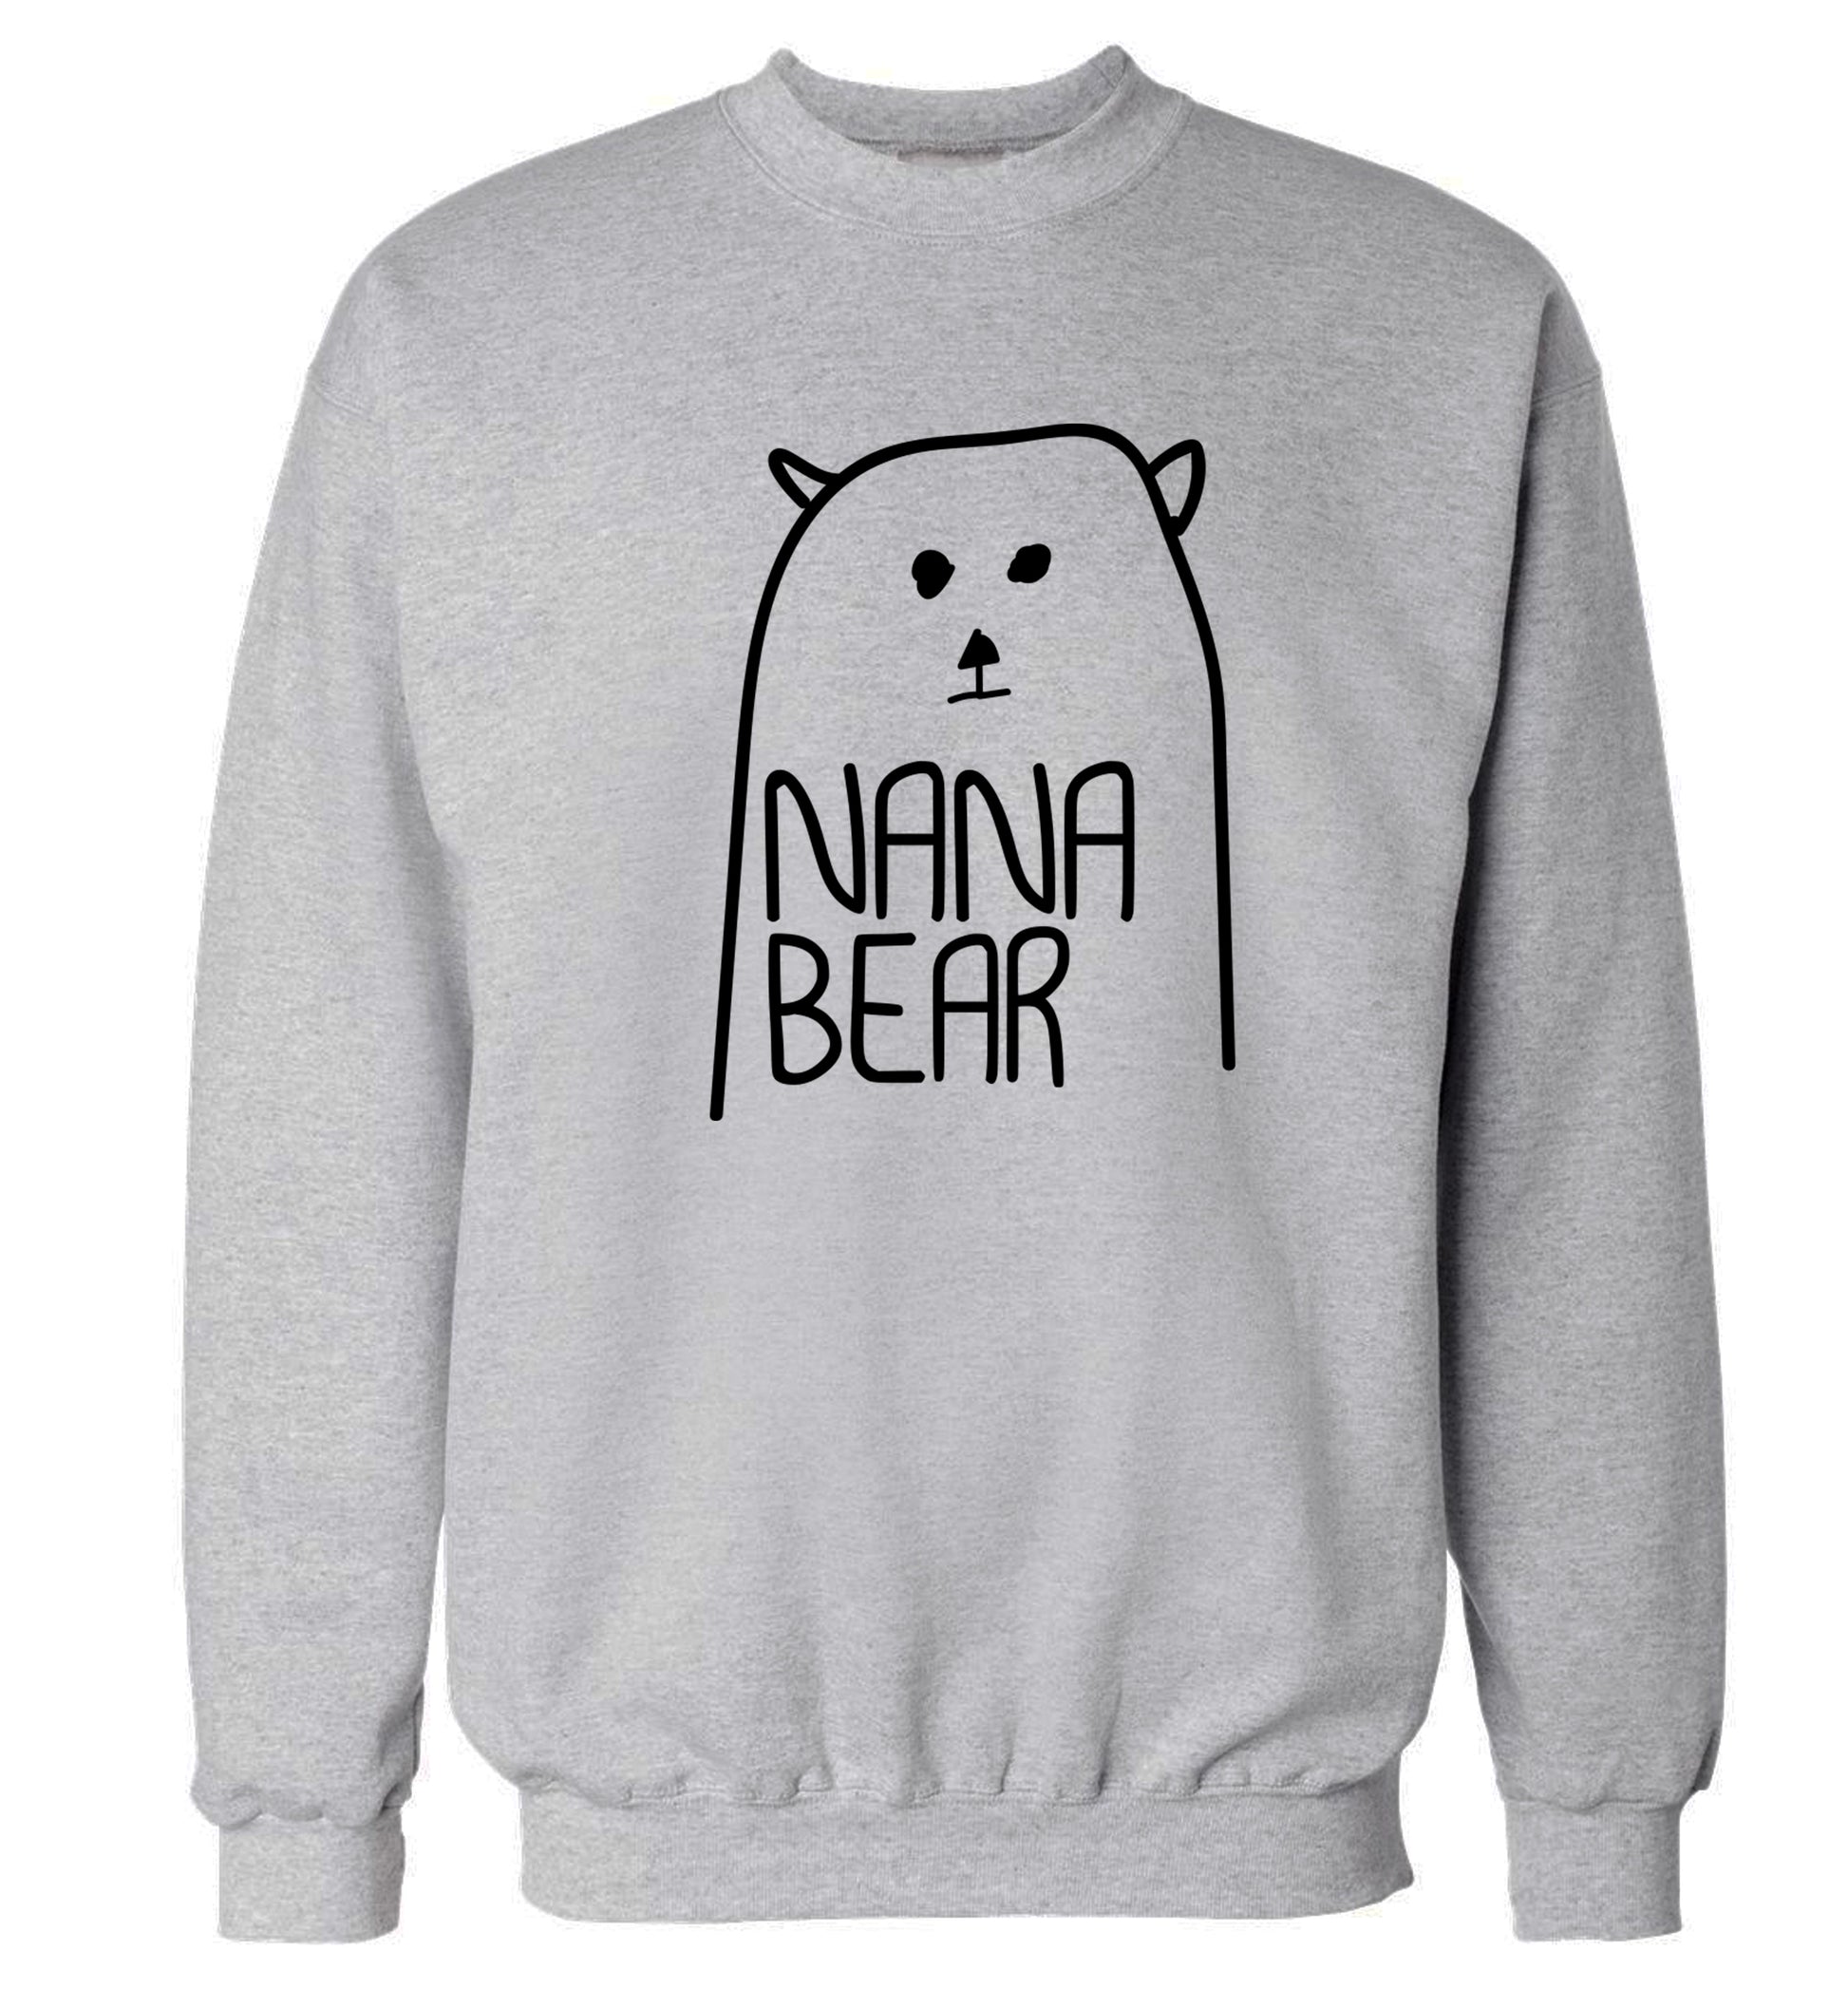 Nana bear Adult's unisex grey Sweater 2XL